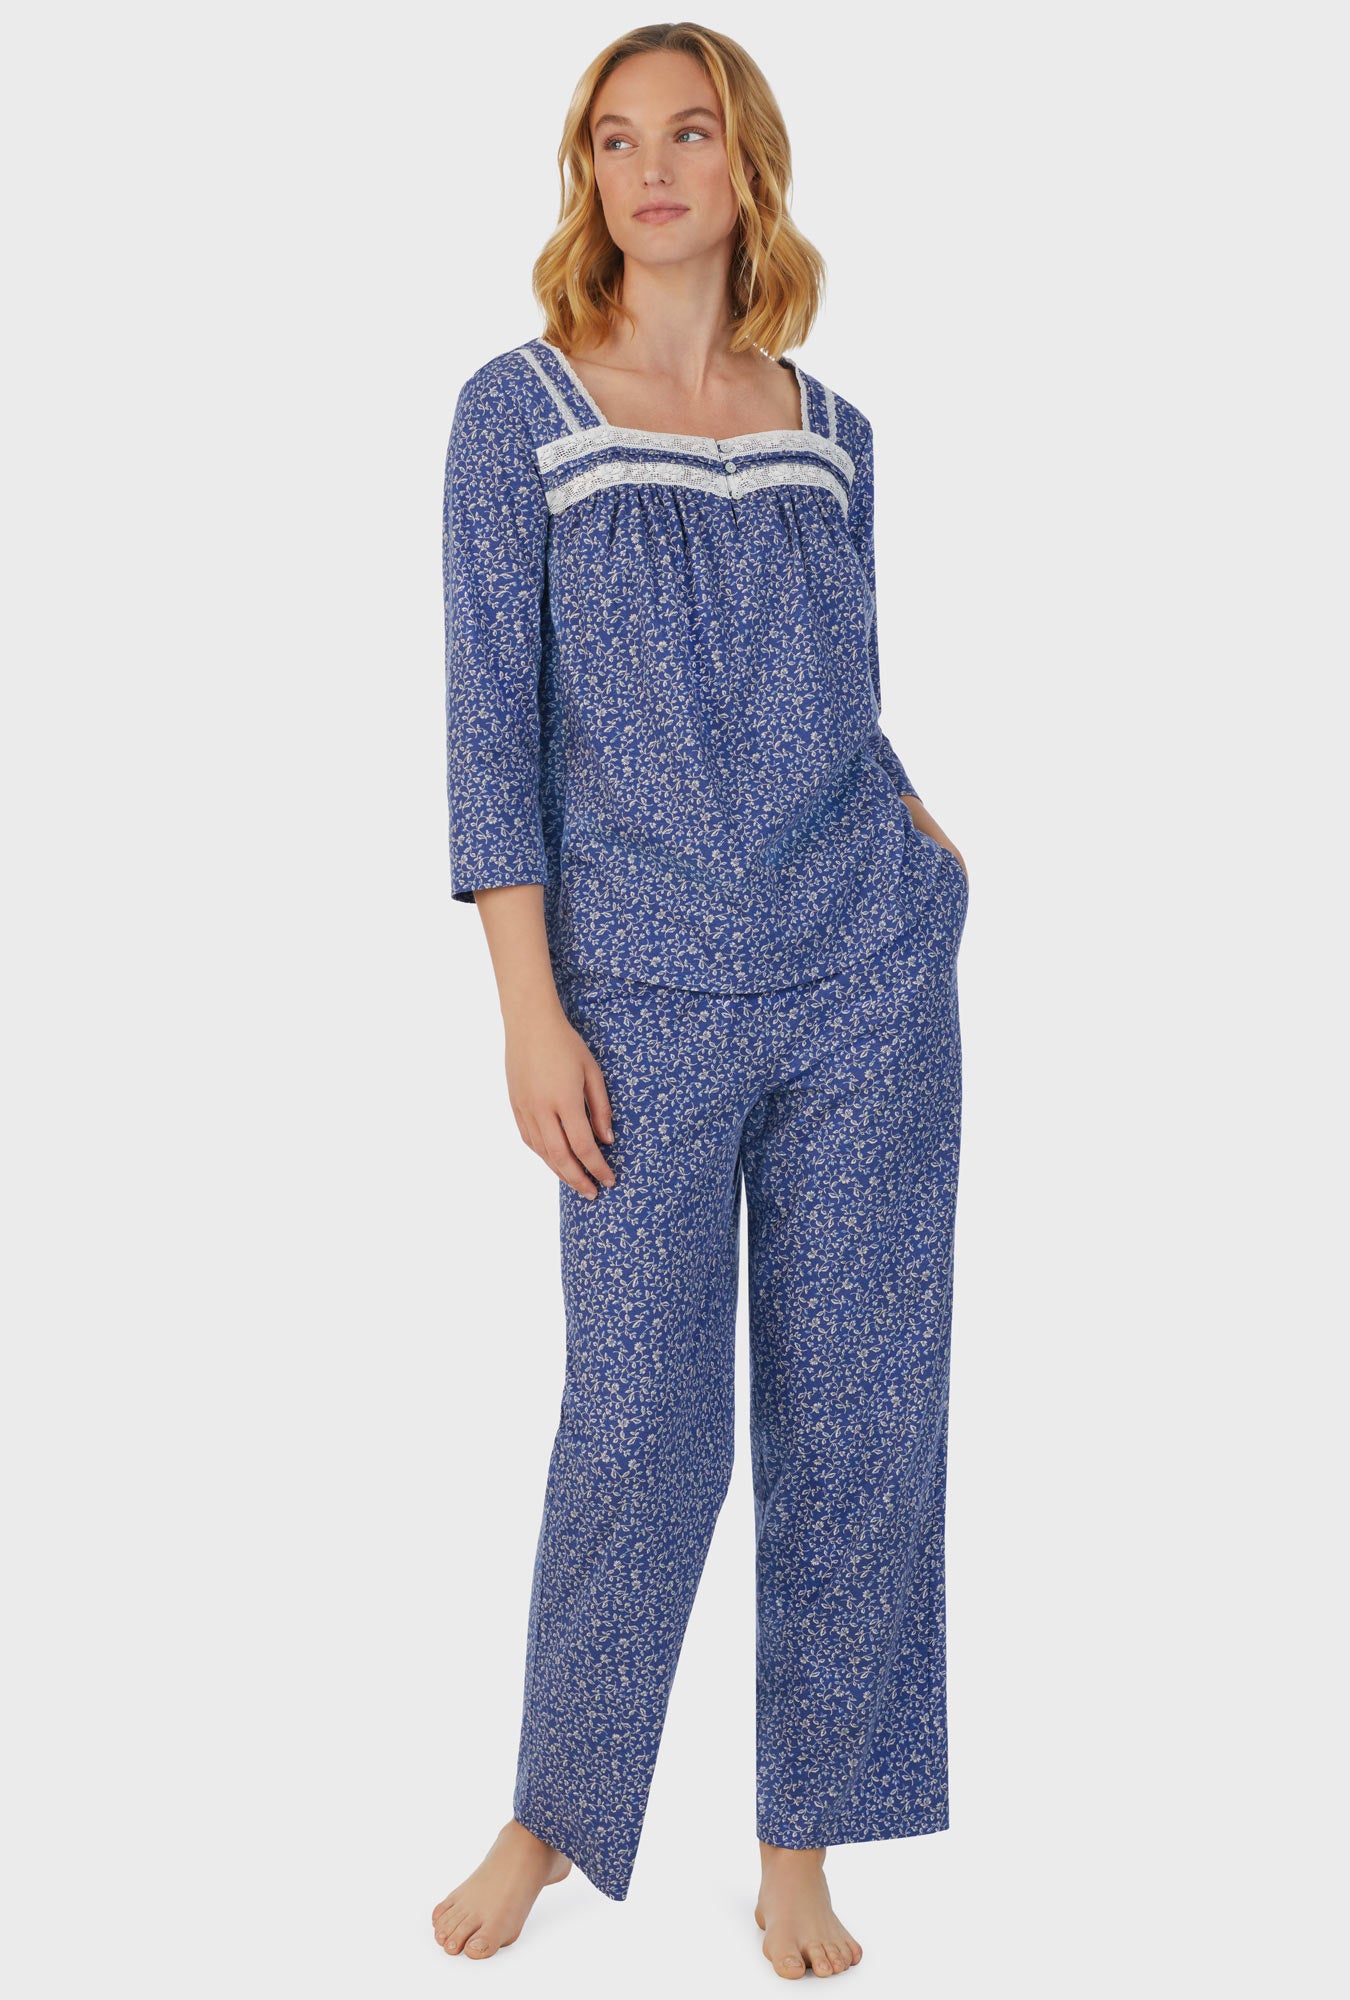 NWT Midnight by Carol Hochman 2-Piece Pajamas, XL